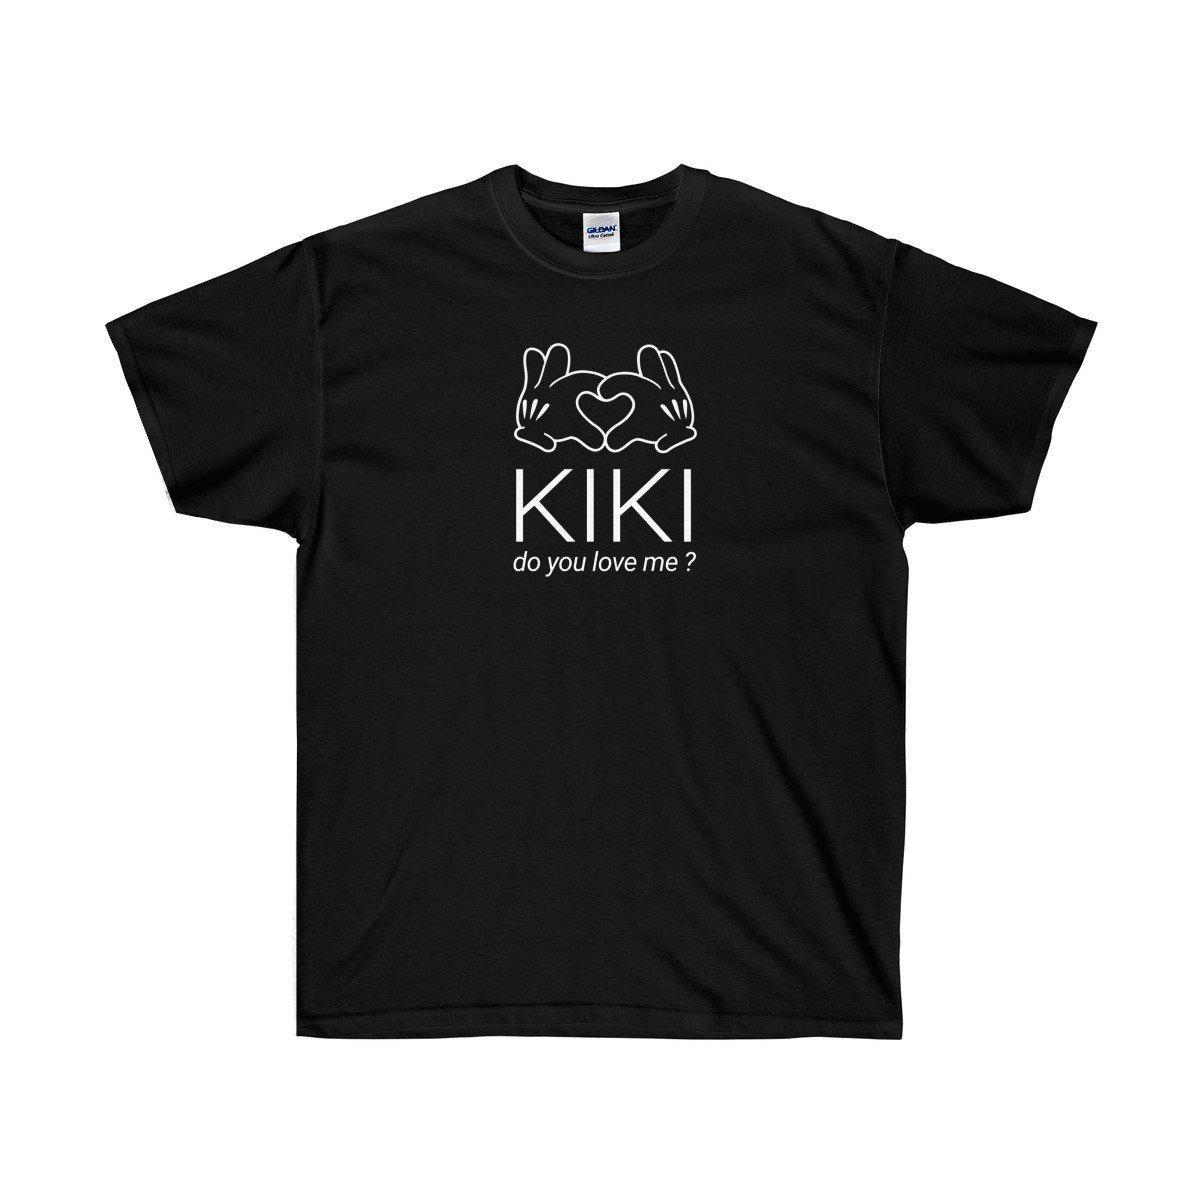 Kiki do you love me? In my feelings Tee - Drake inspired-Black-L-Archethype